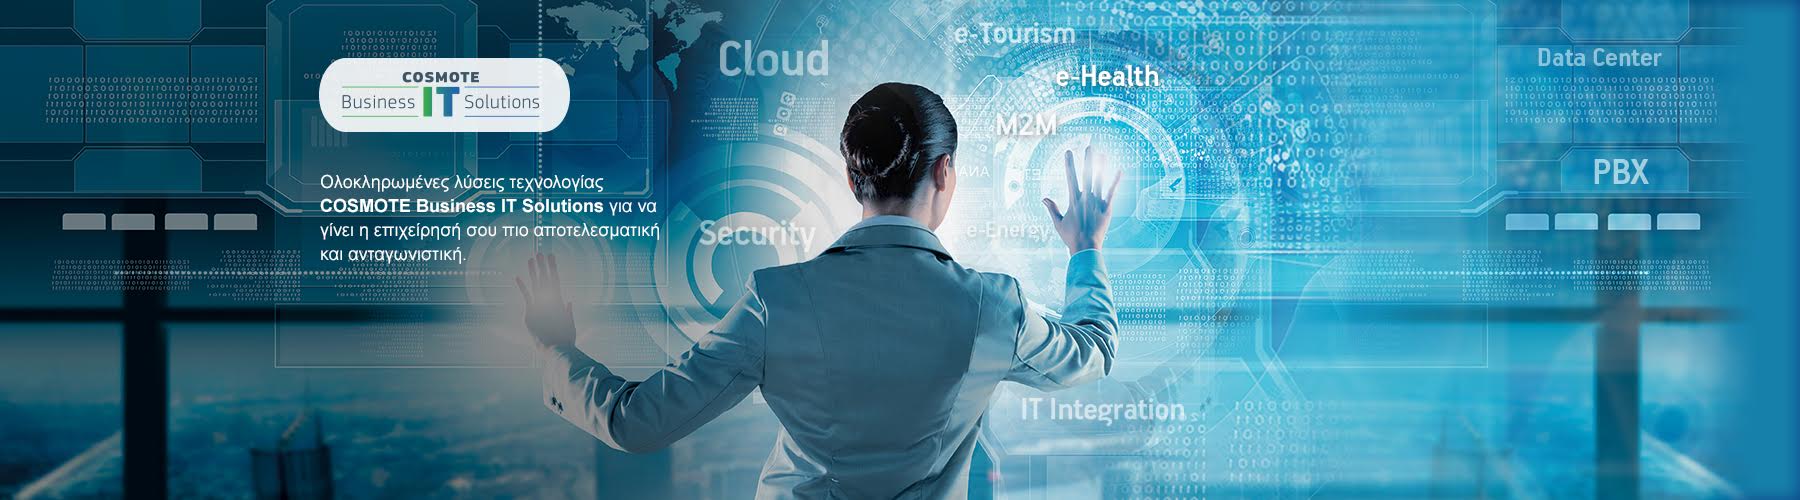 COSMOTE Business IT Solutions: Νέες εφαρμογές και υπηρεσίες στο “σύννεφο”